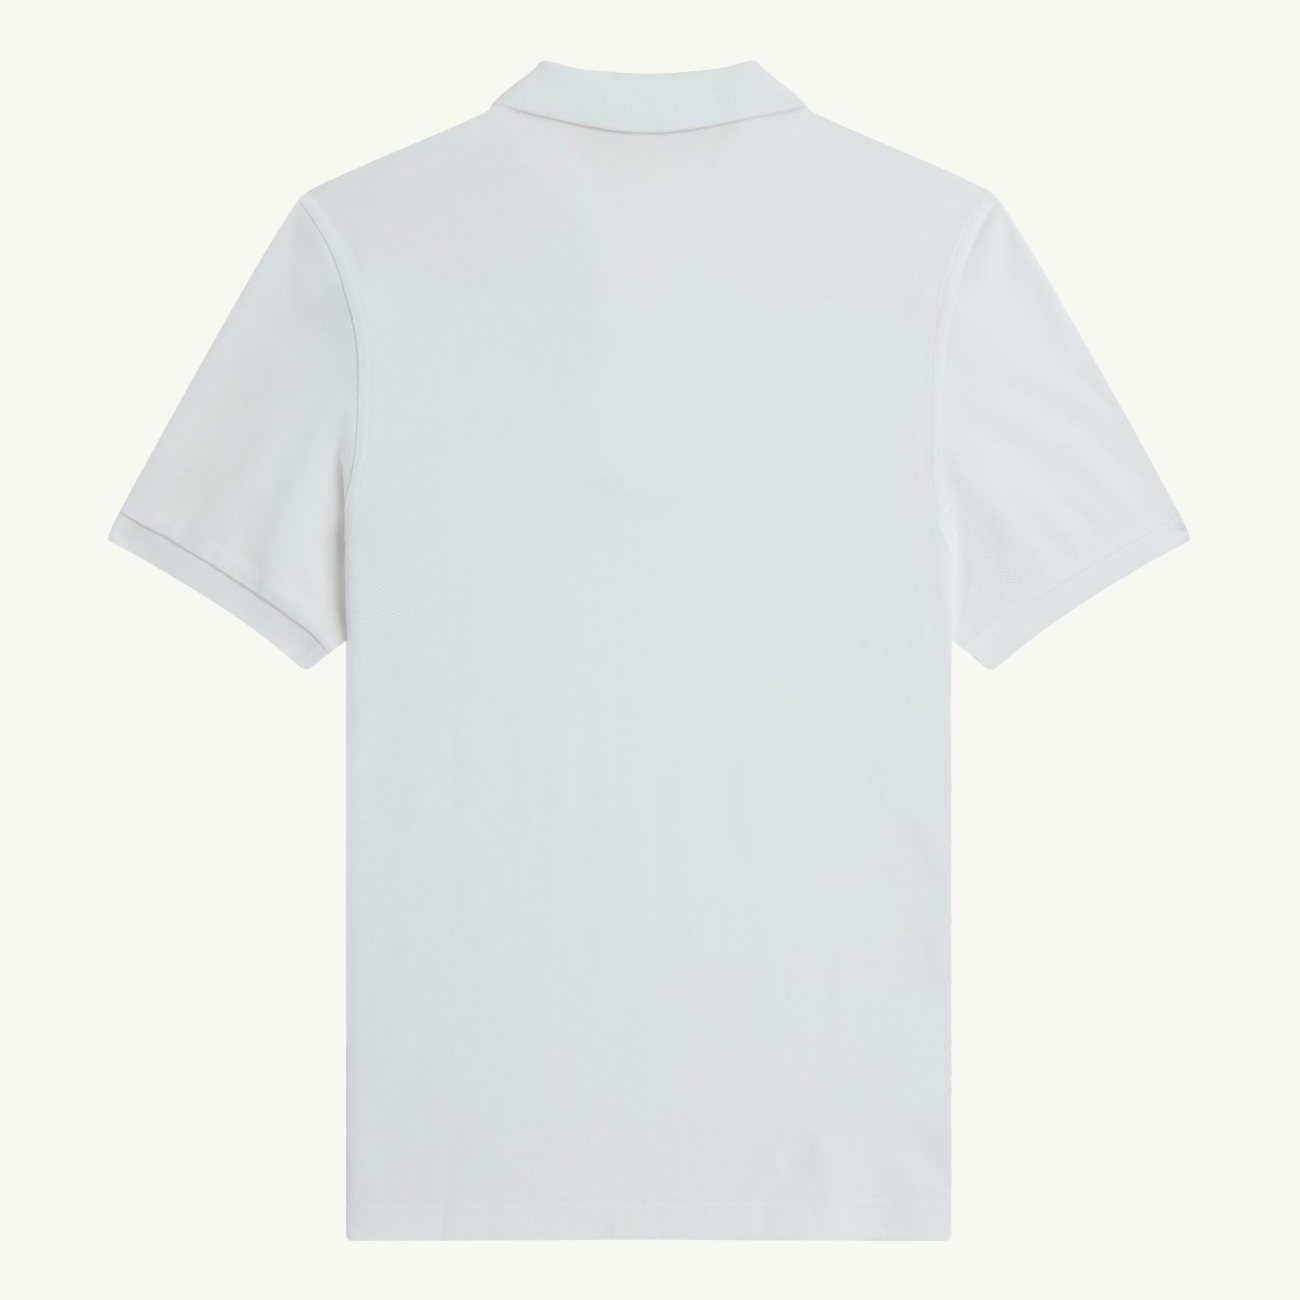 Slim Fit FP Shirt - White/Navy